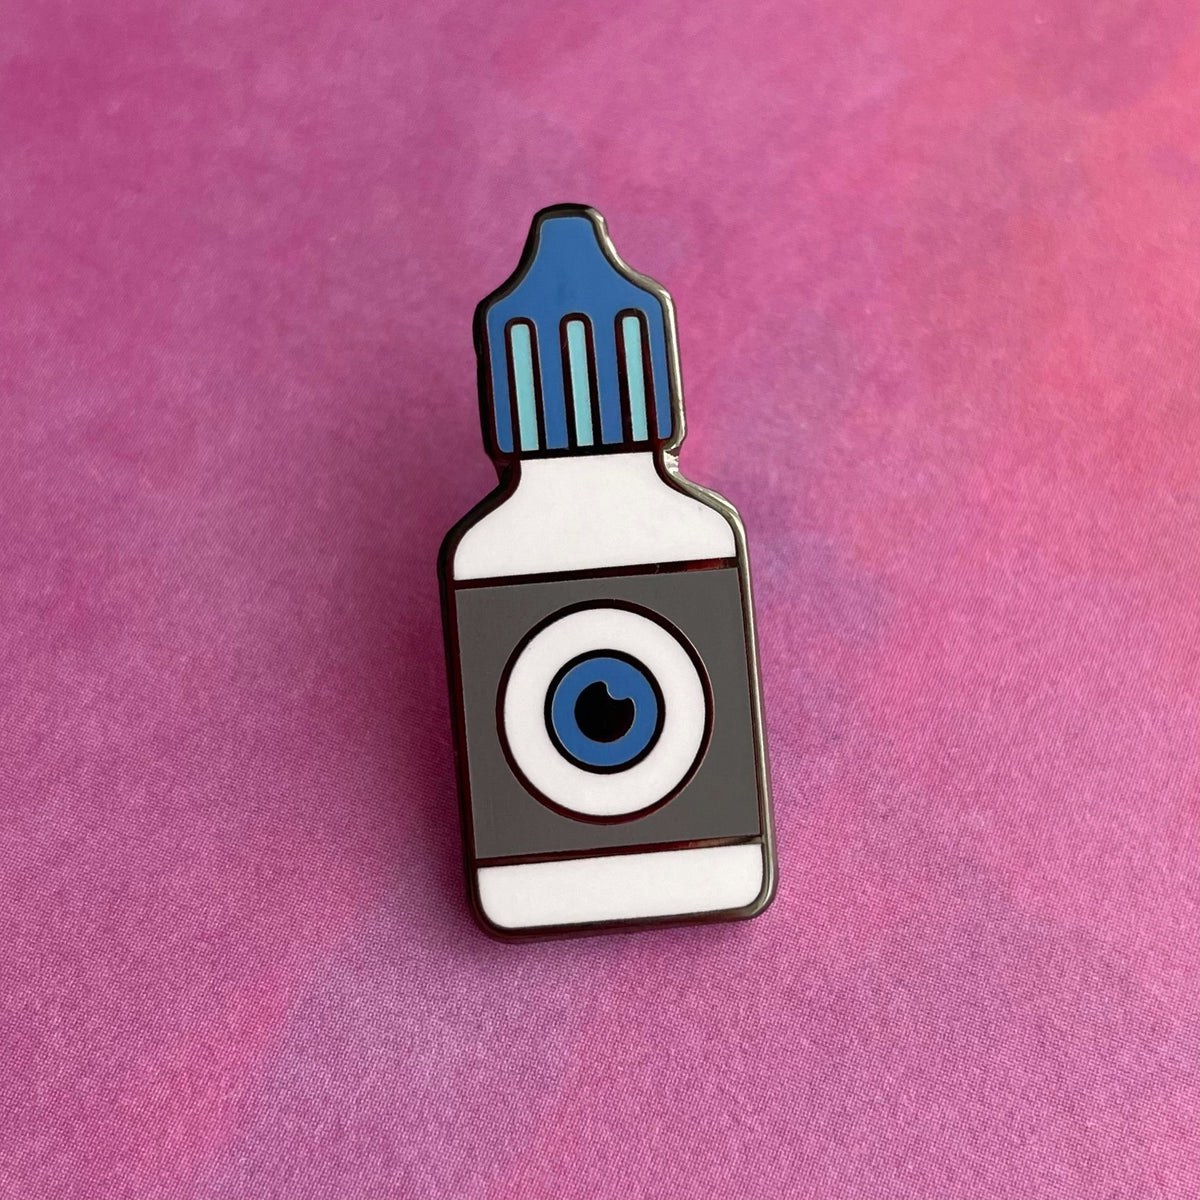 Optometry Pin Pack - Rad Girl Creations